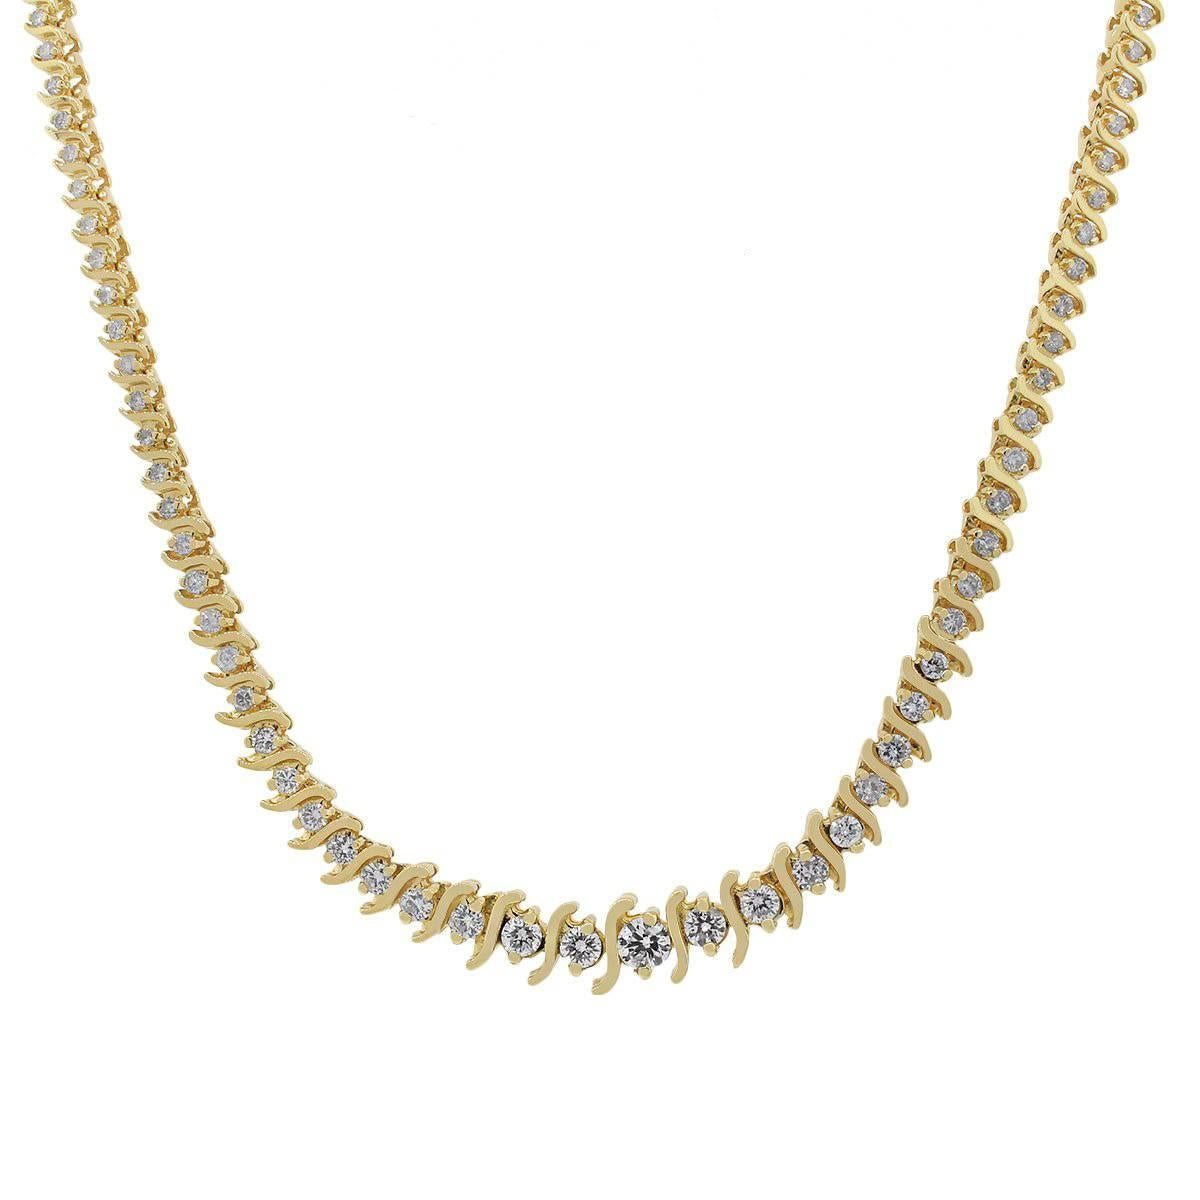 3.60 Carats Diamonds Yellow Gold Tennis Necklace